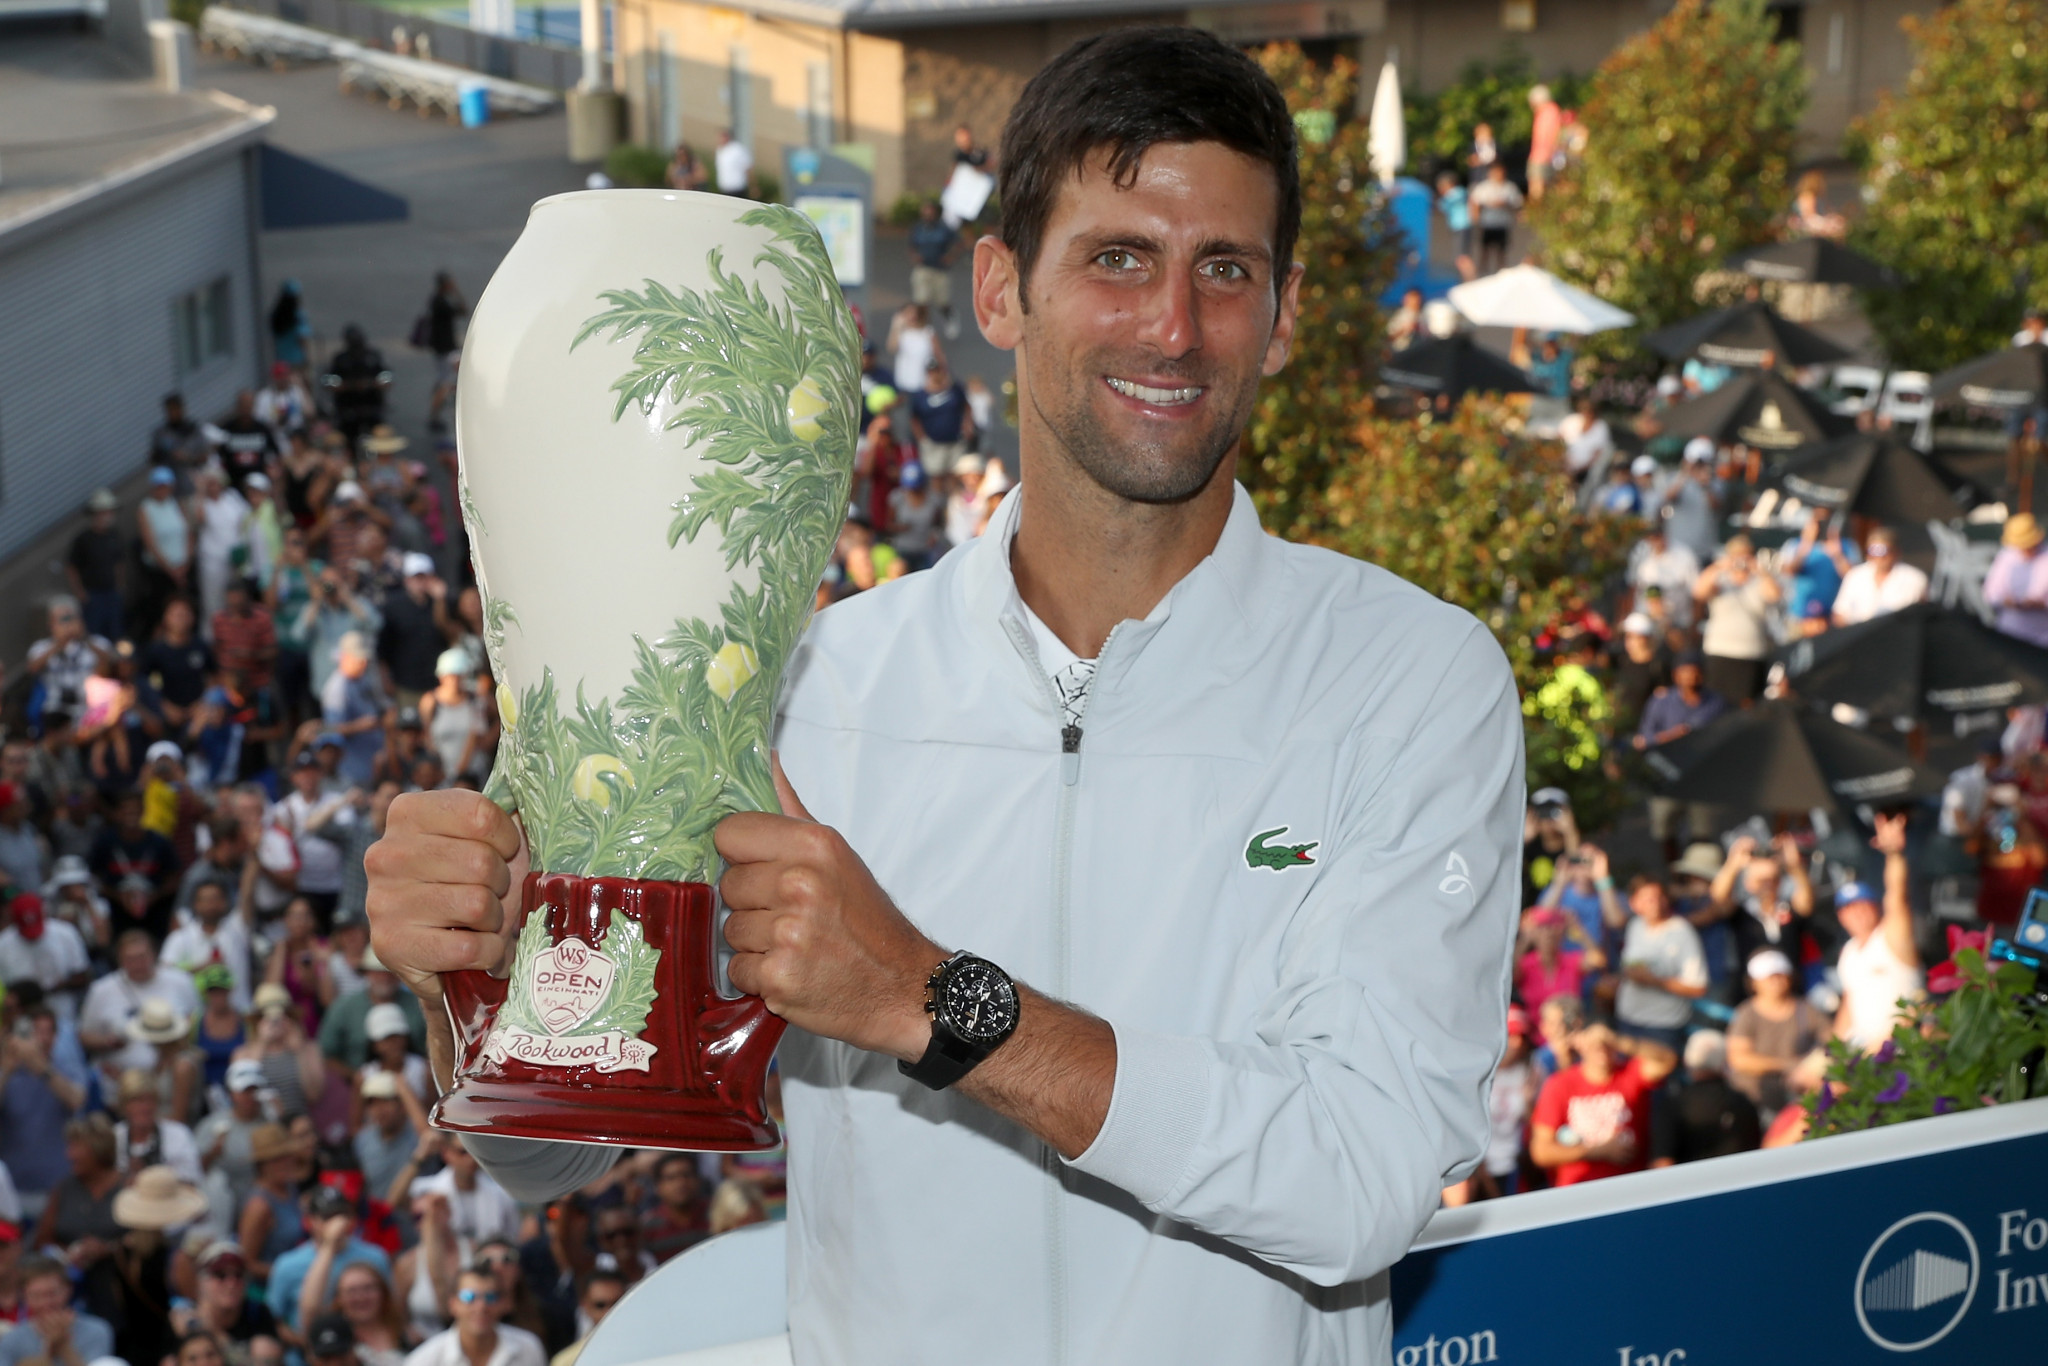 Djokovic completes "Golden Masters" by beating Federer in Cincinnati final